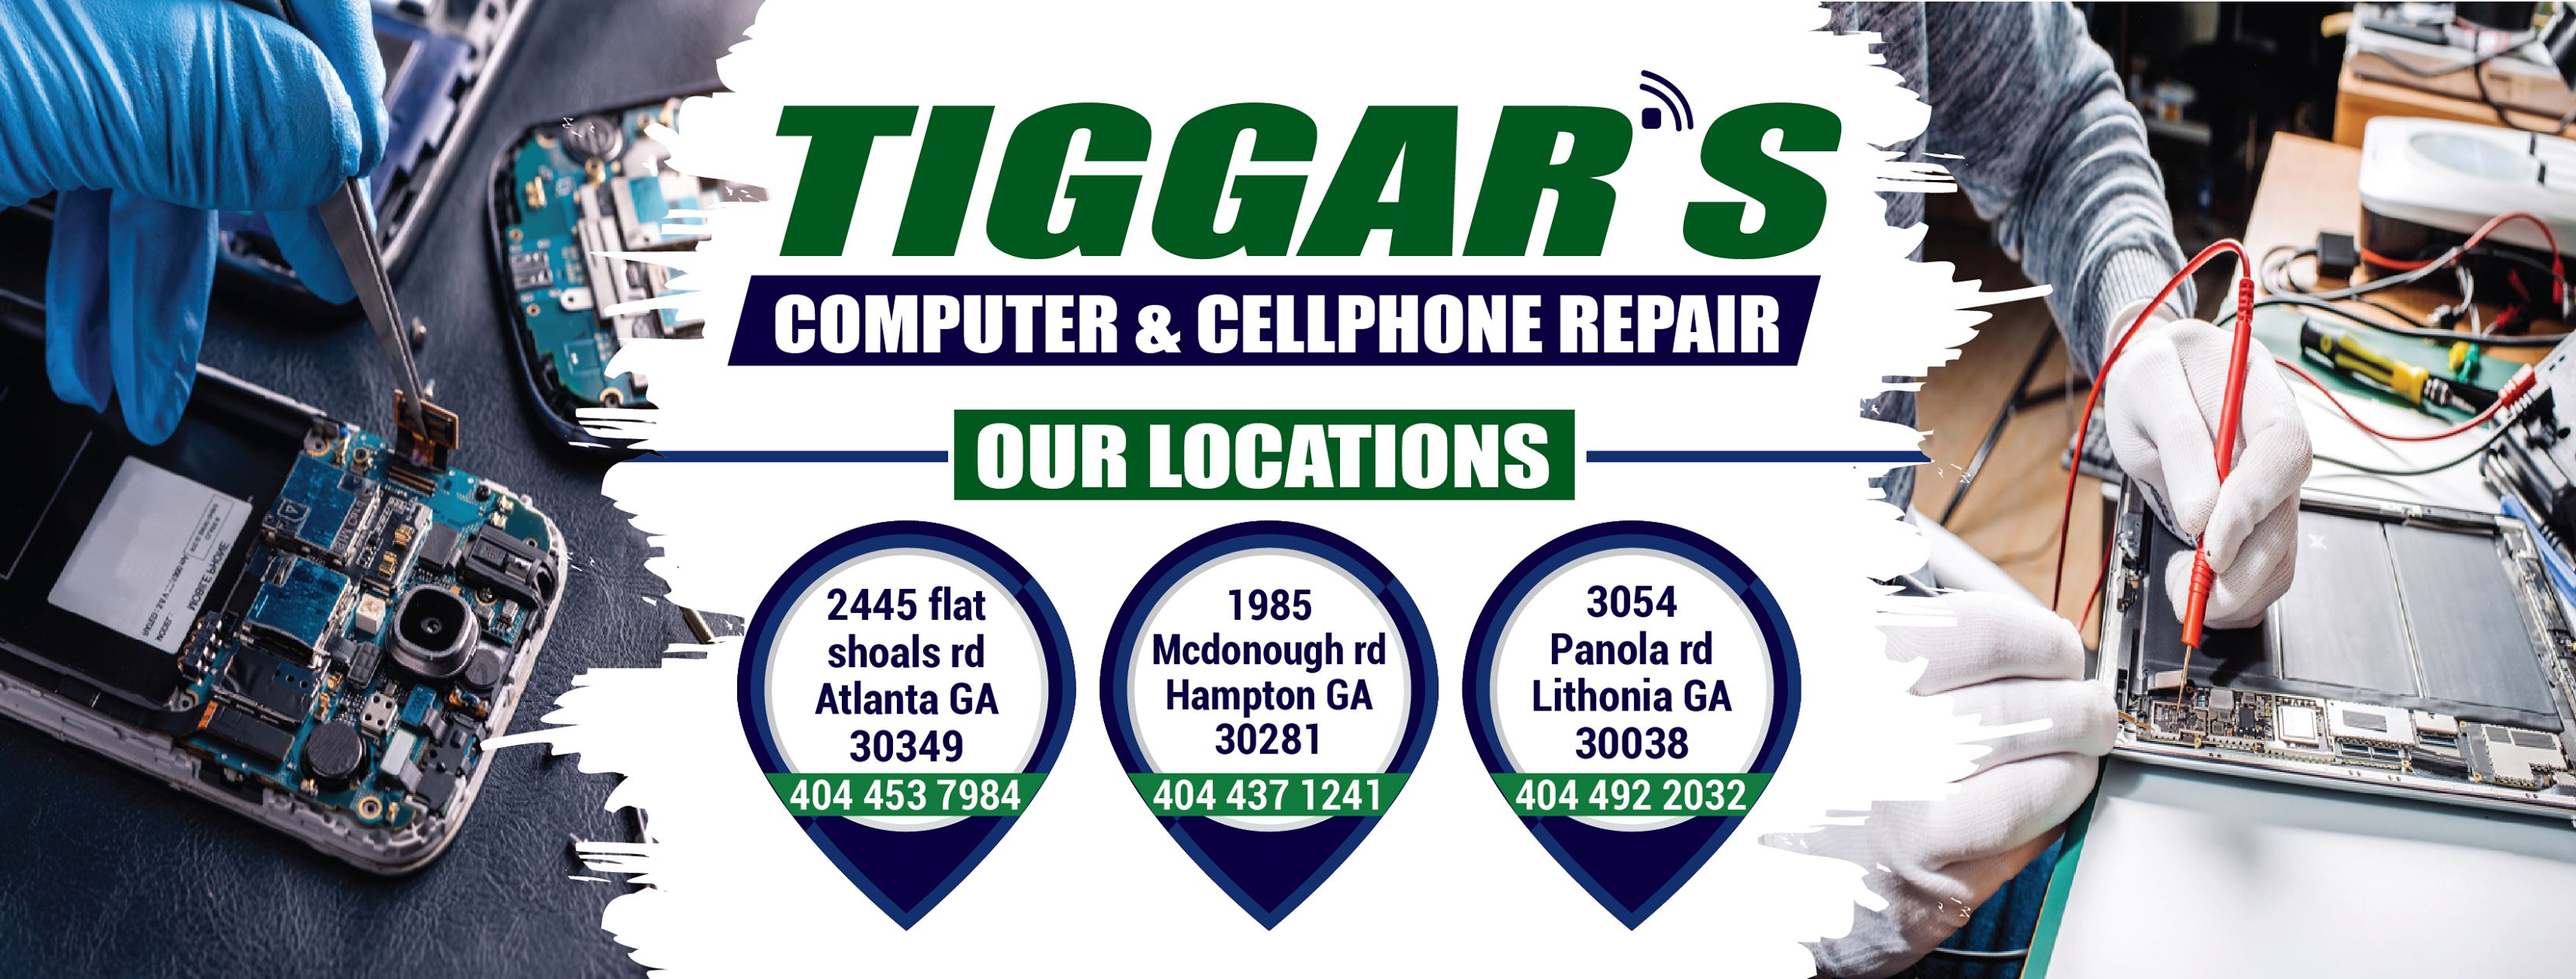 Tiggar's Computer & Cell phone Repair